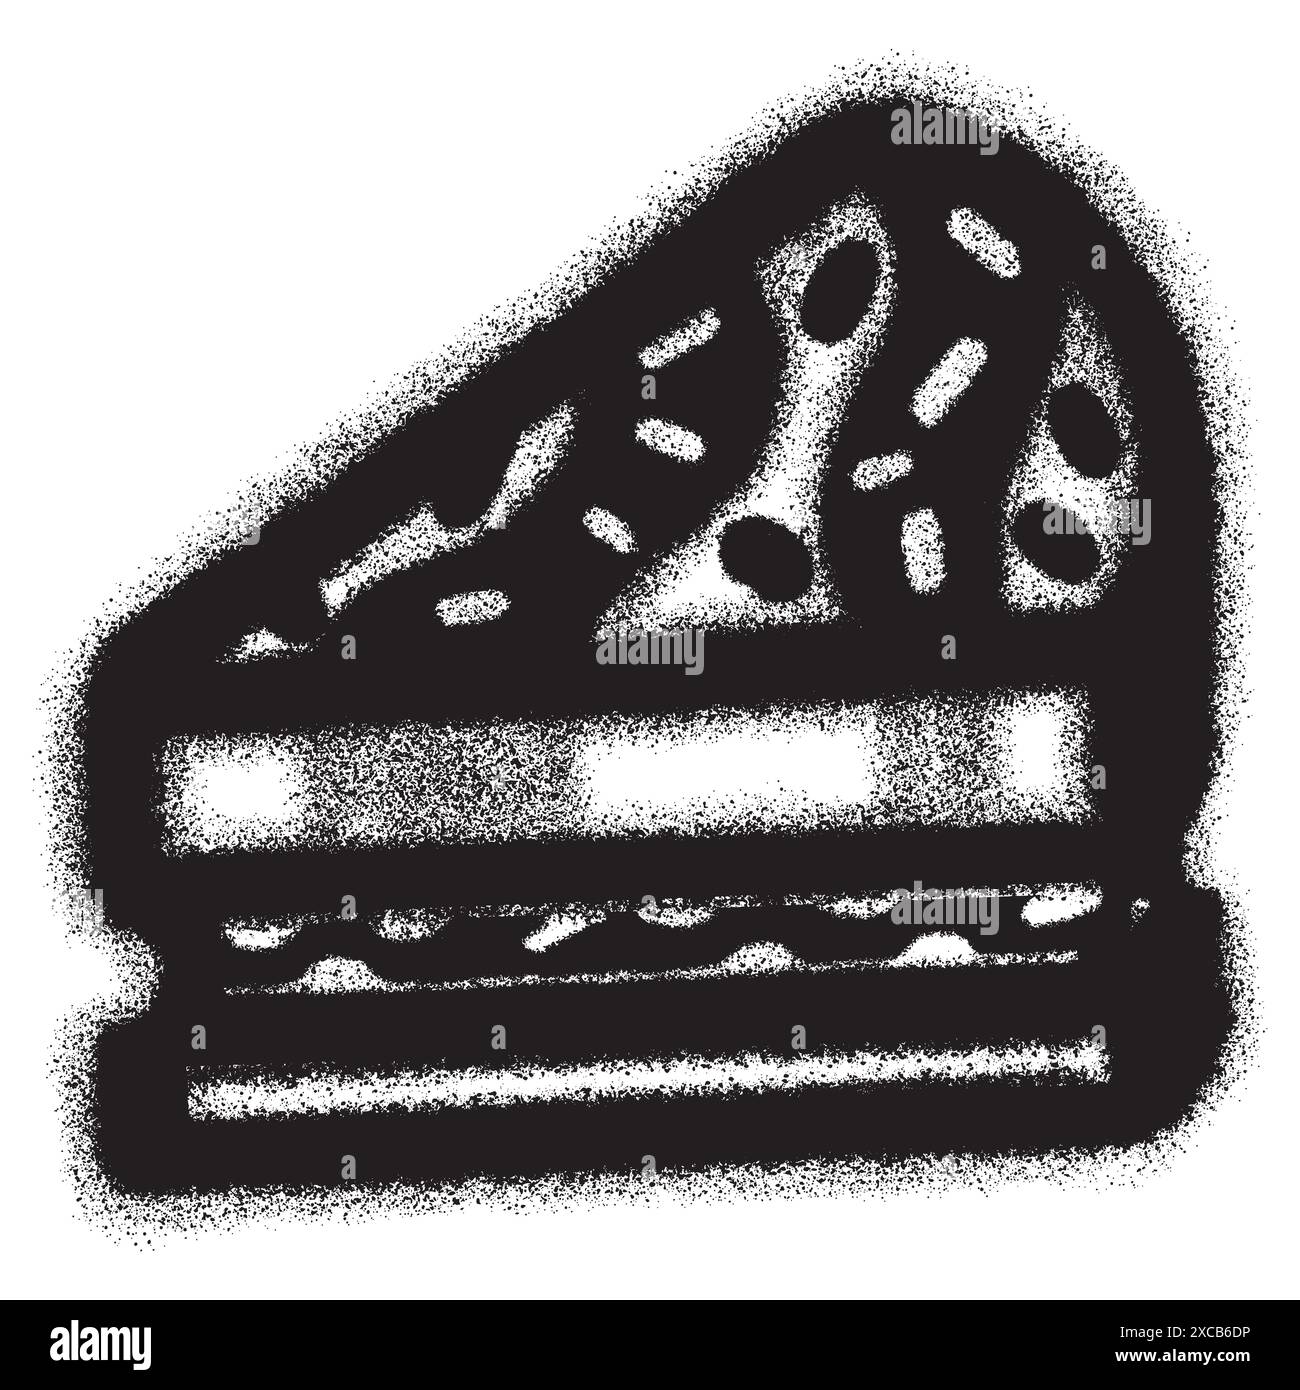 Sandwich logo in urban graffiti style with black spray paint. vector illustration. Stock Vector